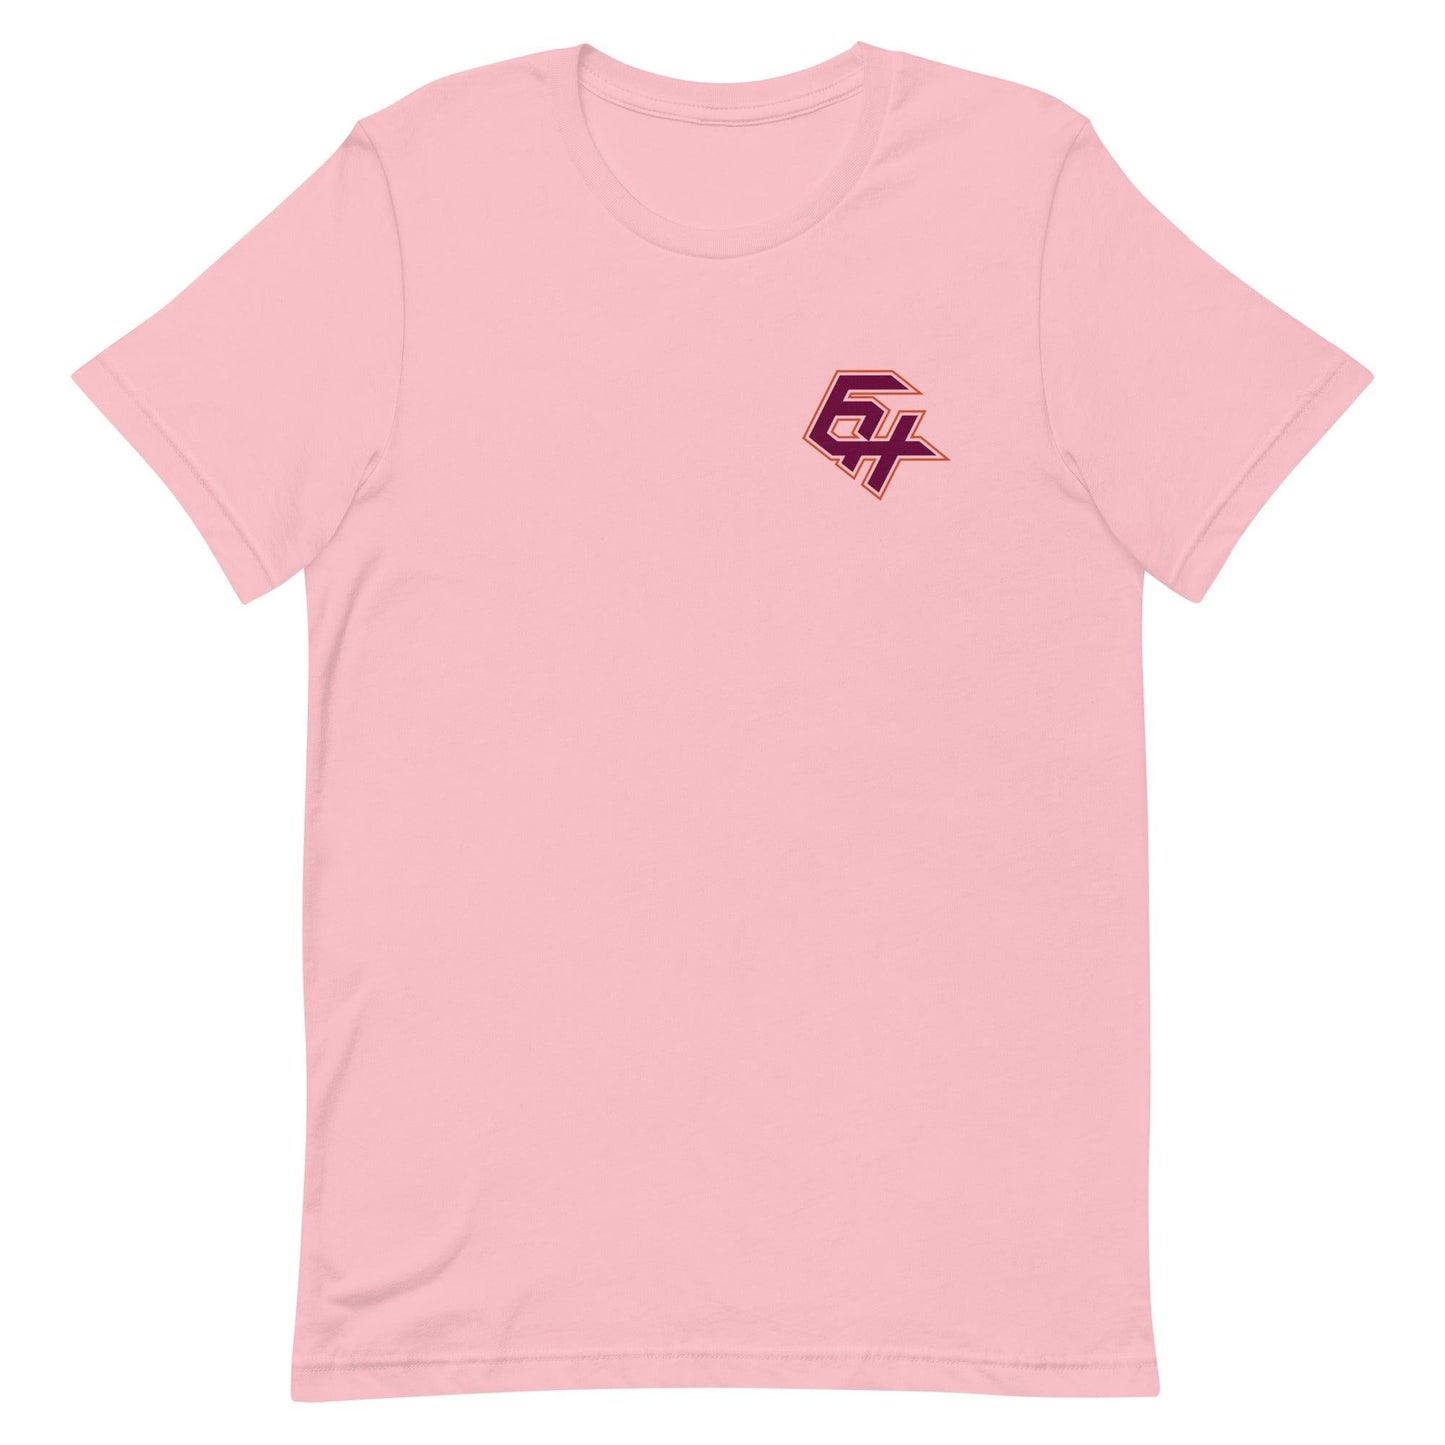 Elijah Howard "Essential" t-shirt - Fan Arch